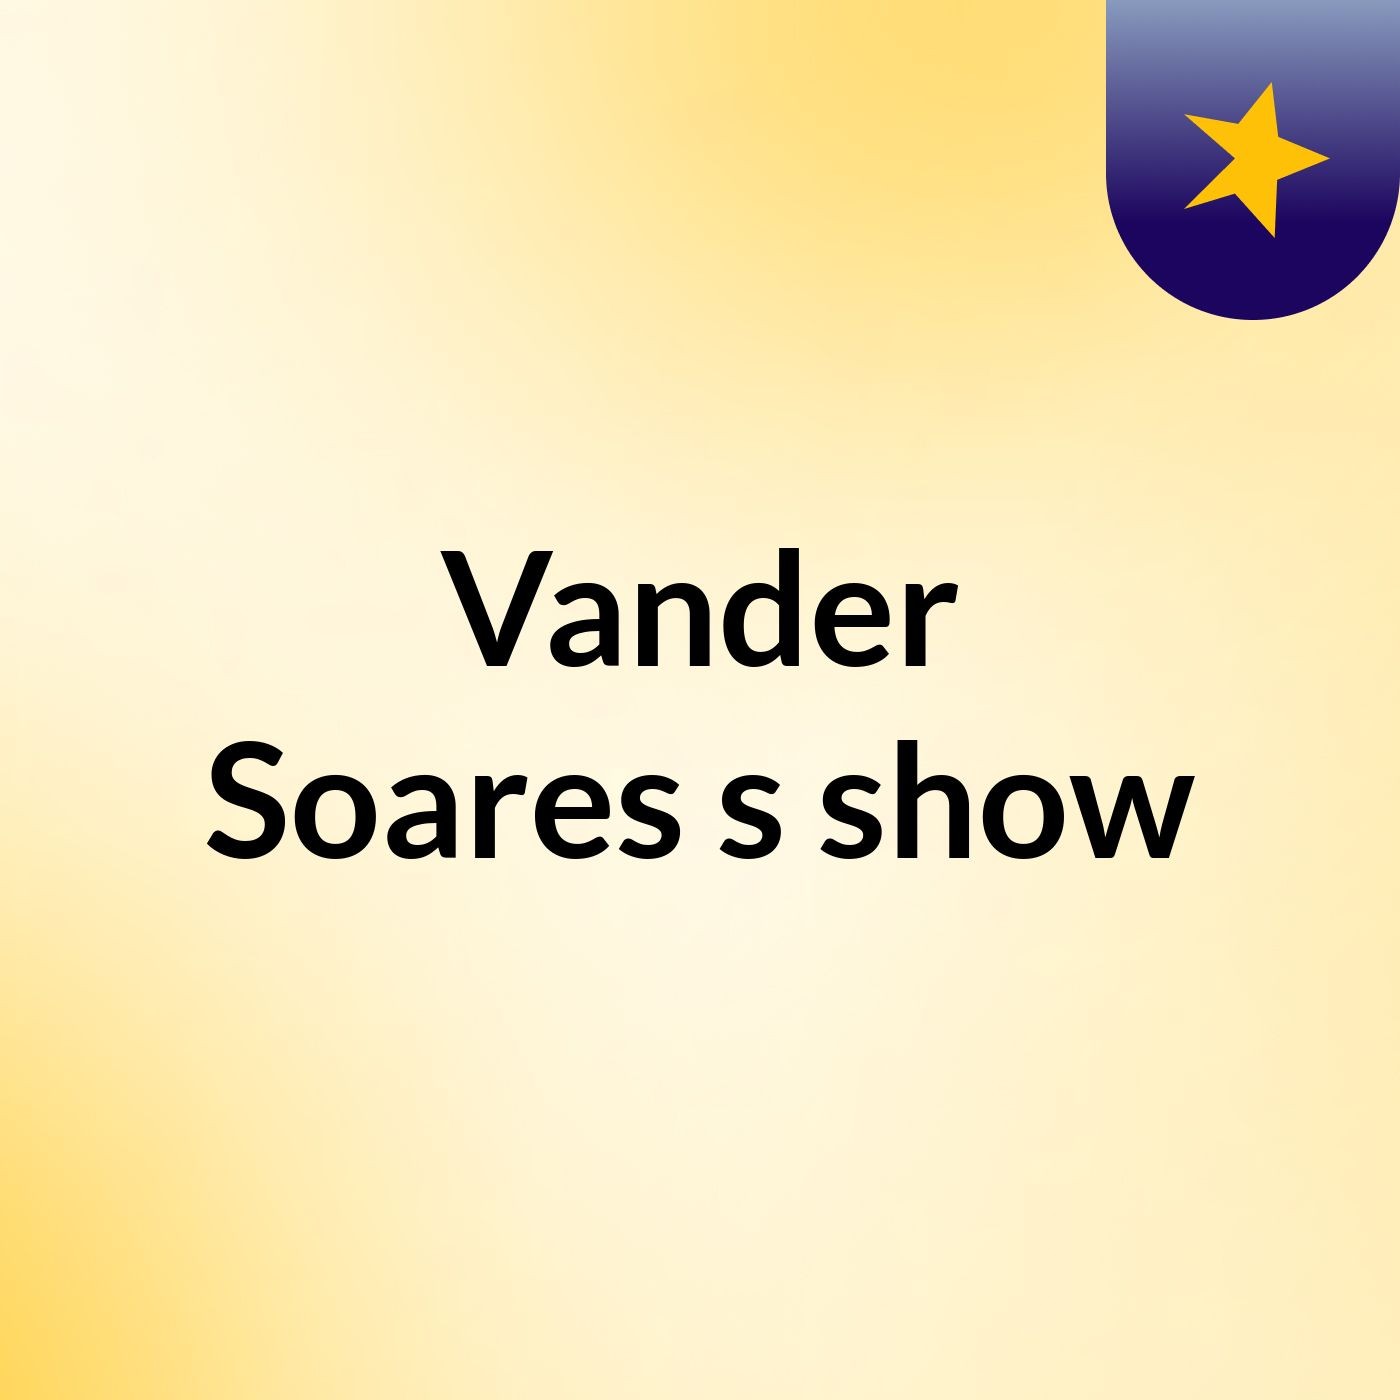 Episódio 4 - Vander Soares's show